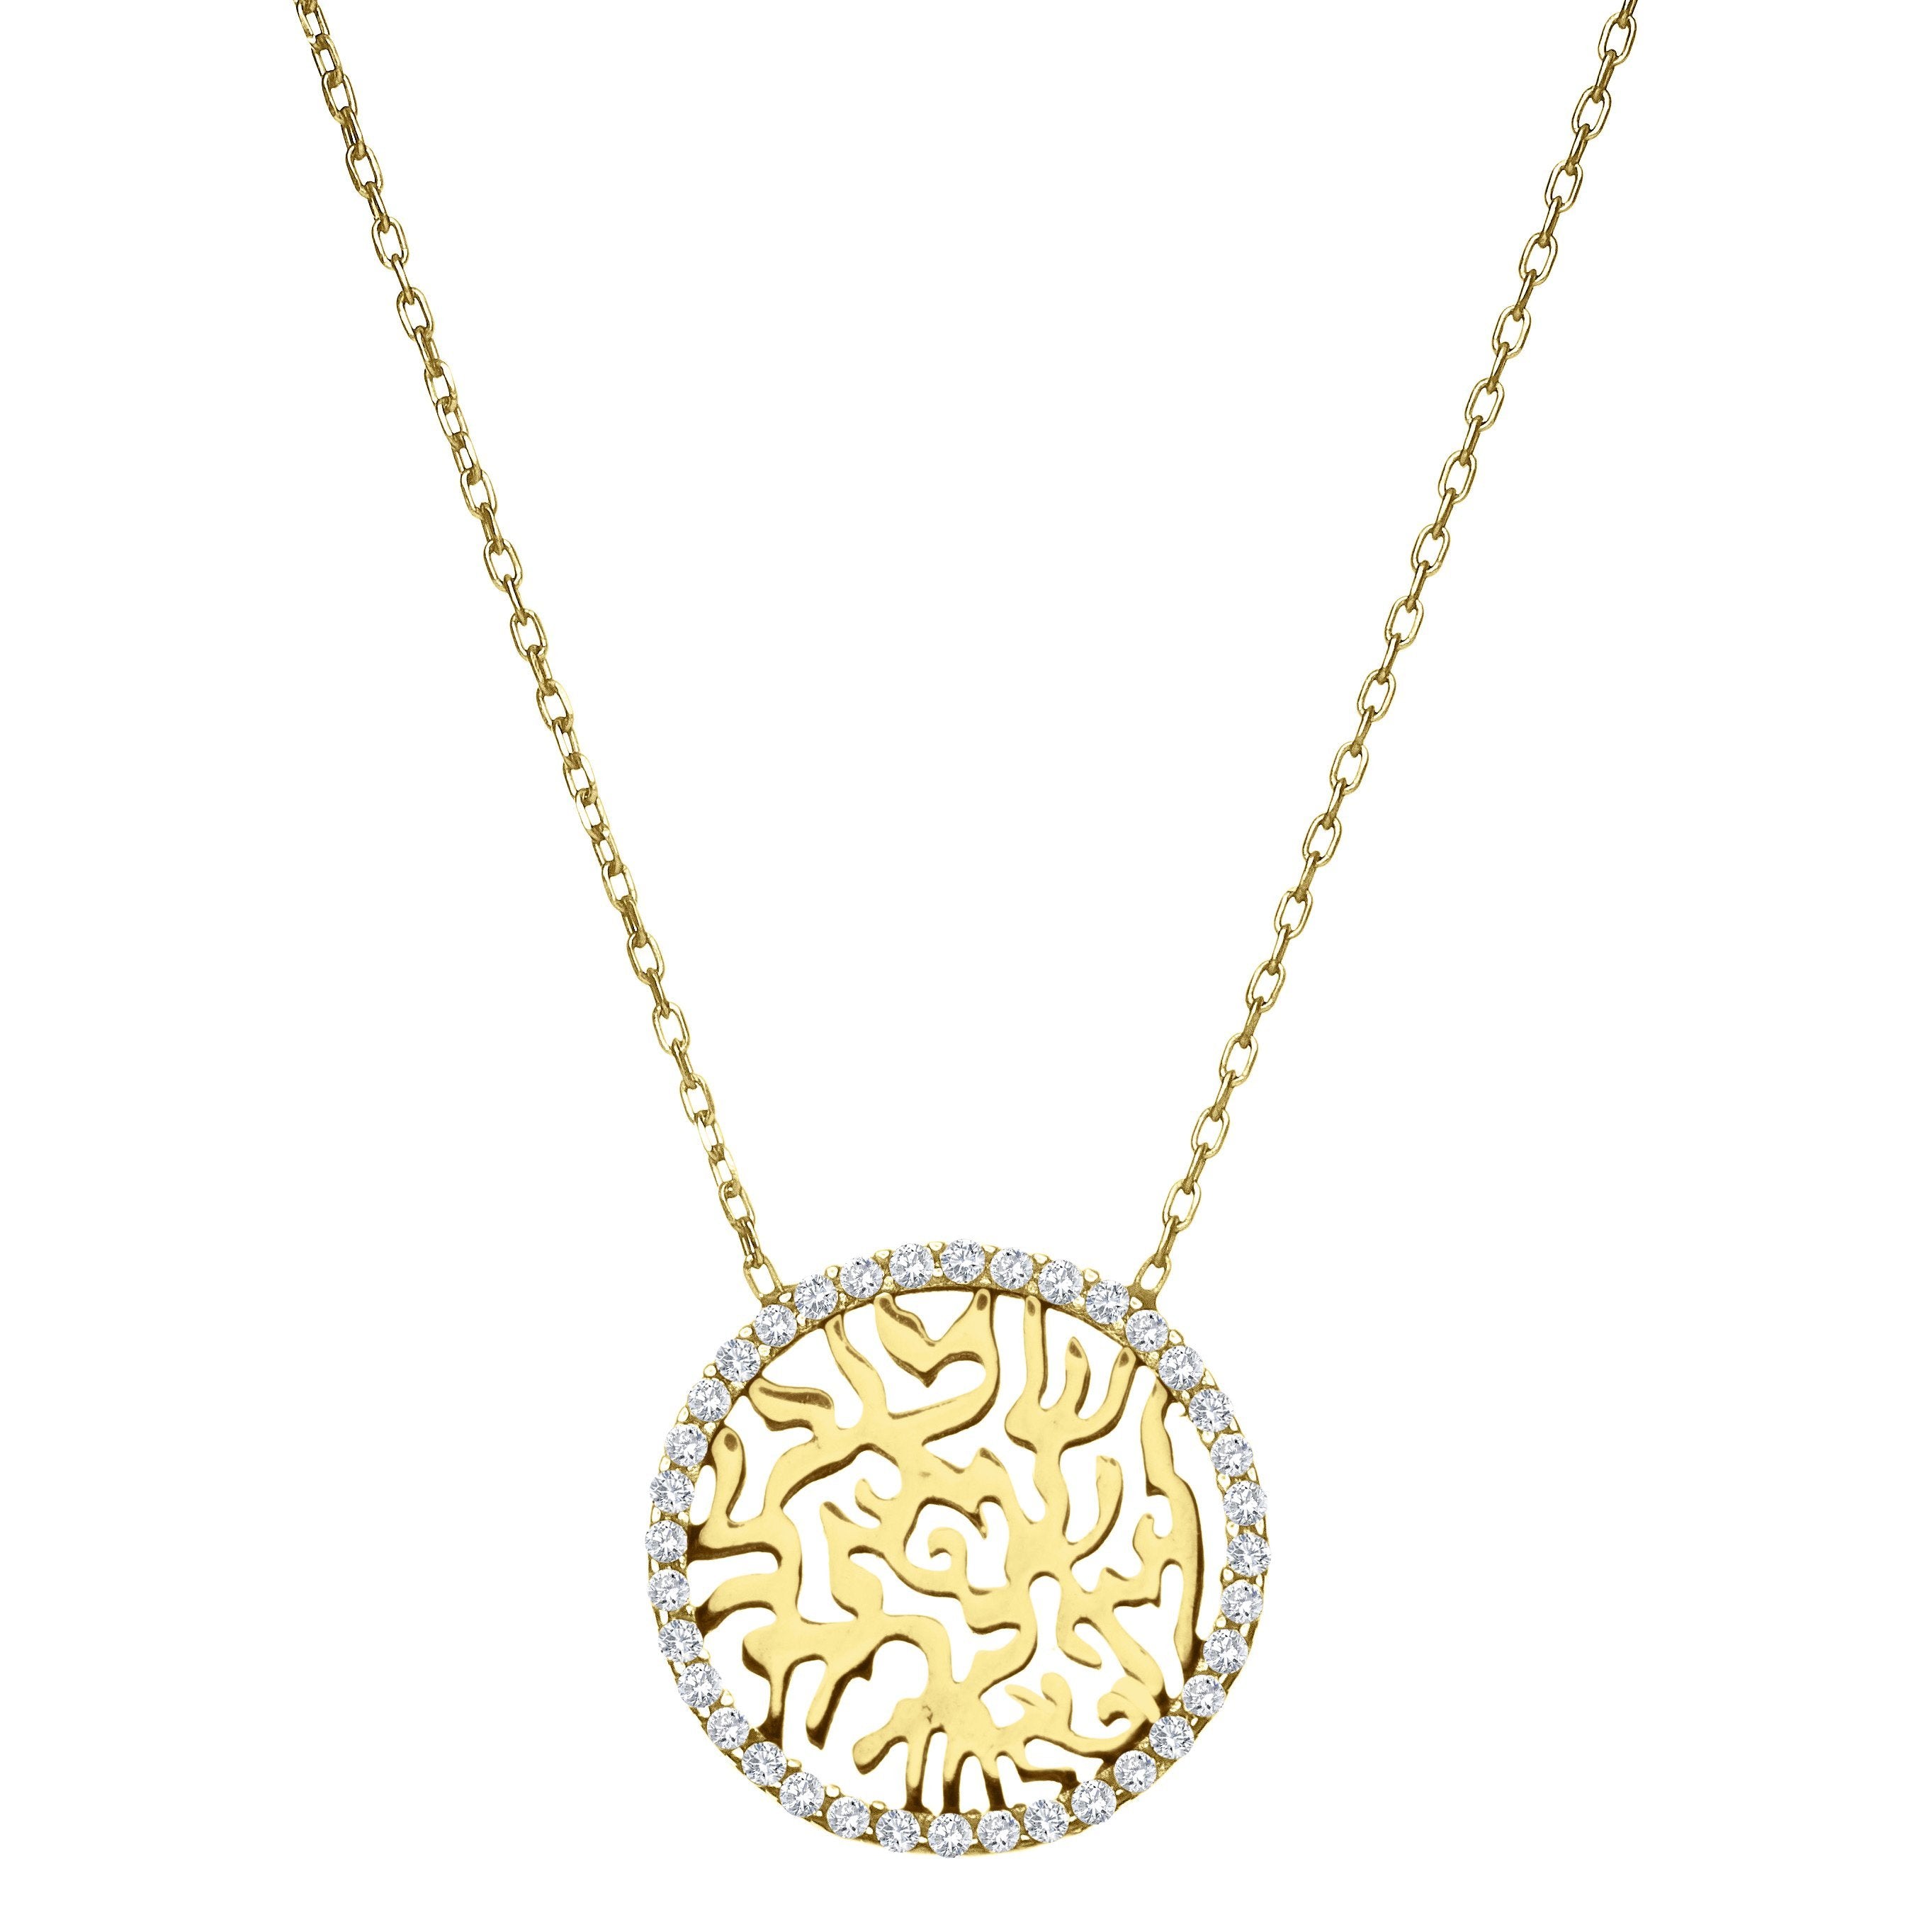 Shema Hebrew Prayer Necklace in gold tones